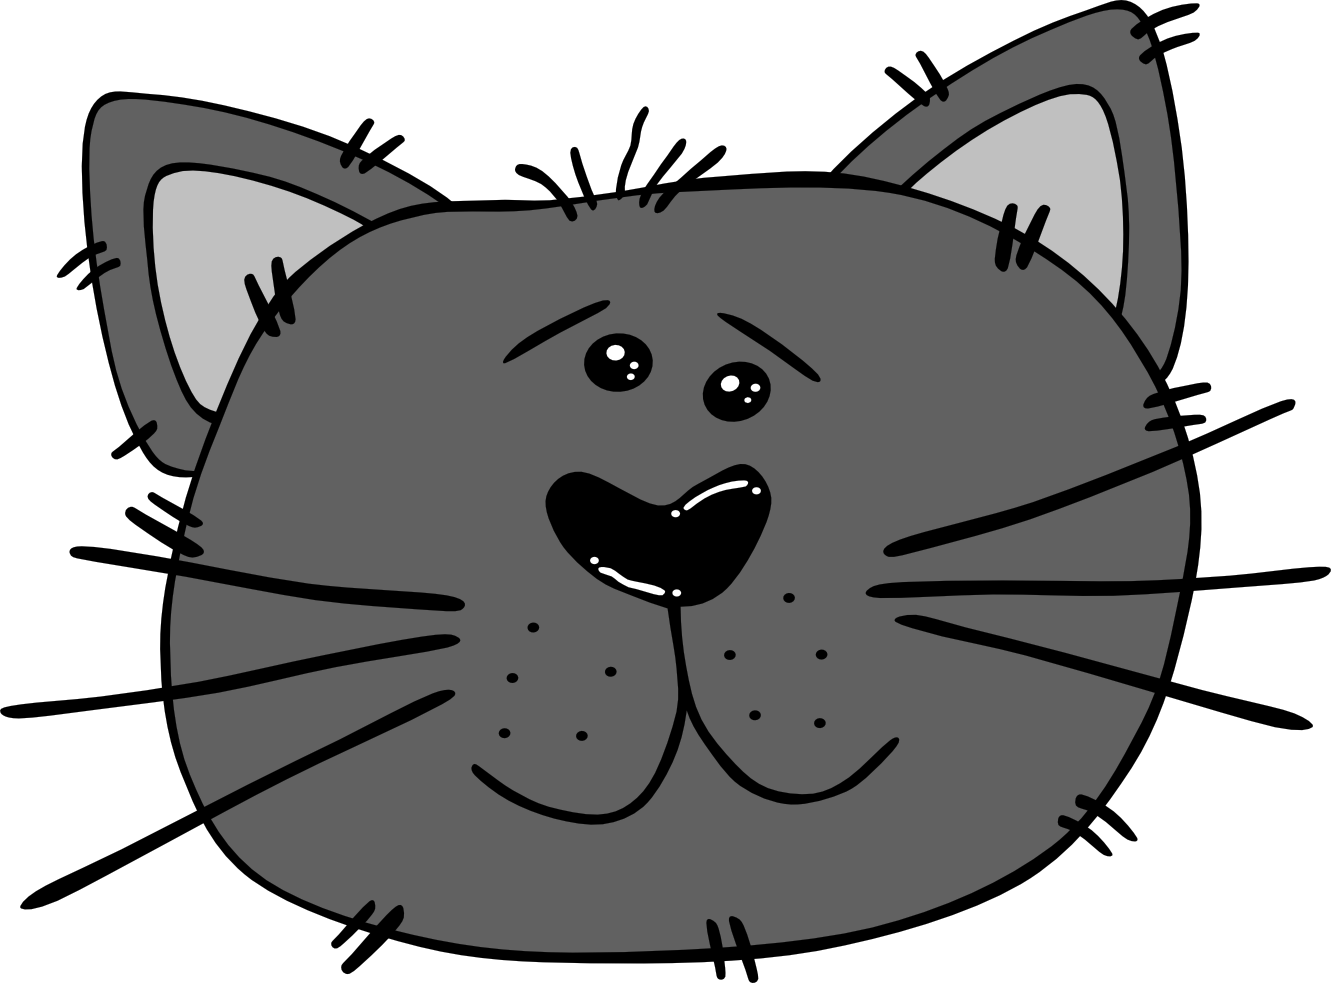 gerald g cartoon cat face SVG